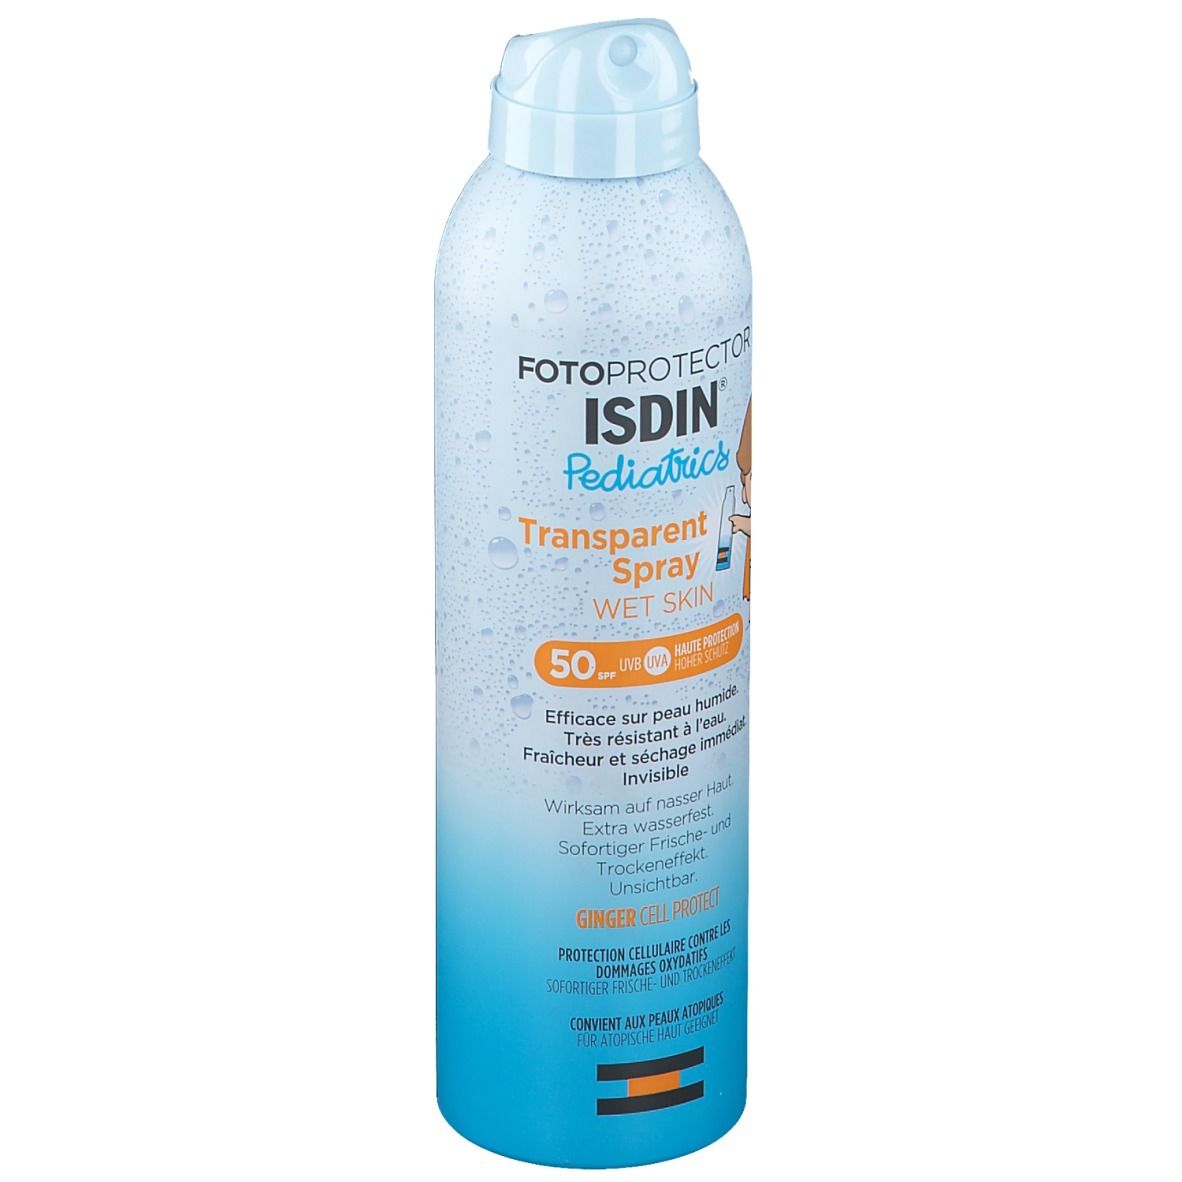 ISDIN® Fotoprotector Pediatrics Transparent Spray Wet Skin SPF50+